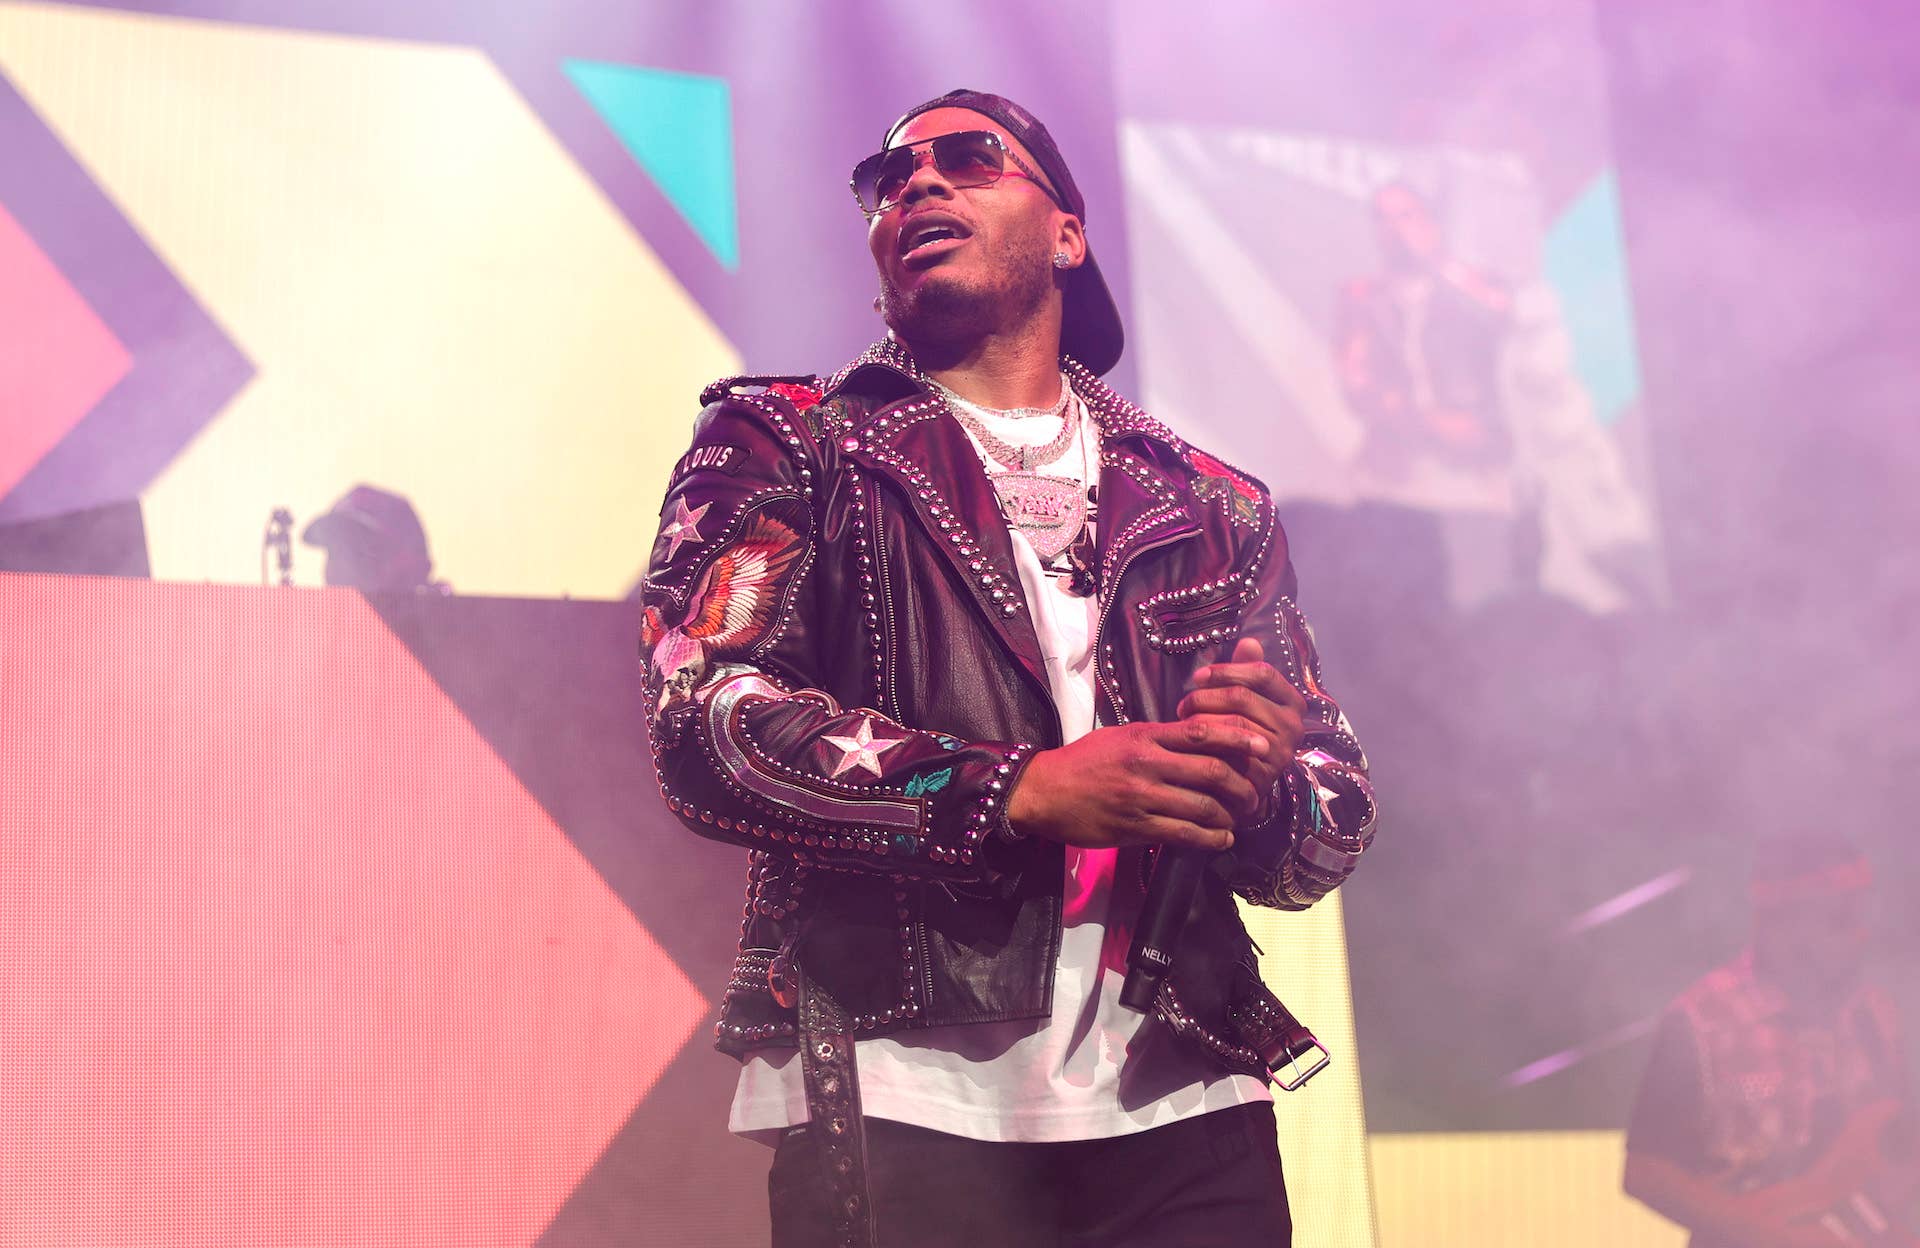 Nelly performs at Bridgestone Arena on December 05, 2021 in Nashville